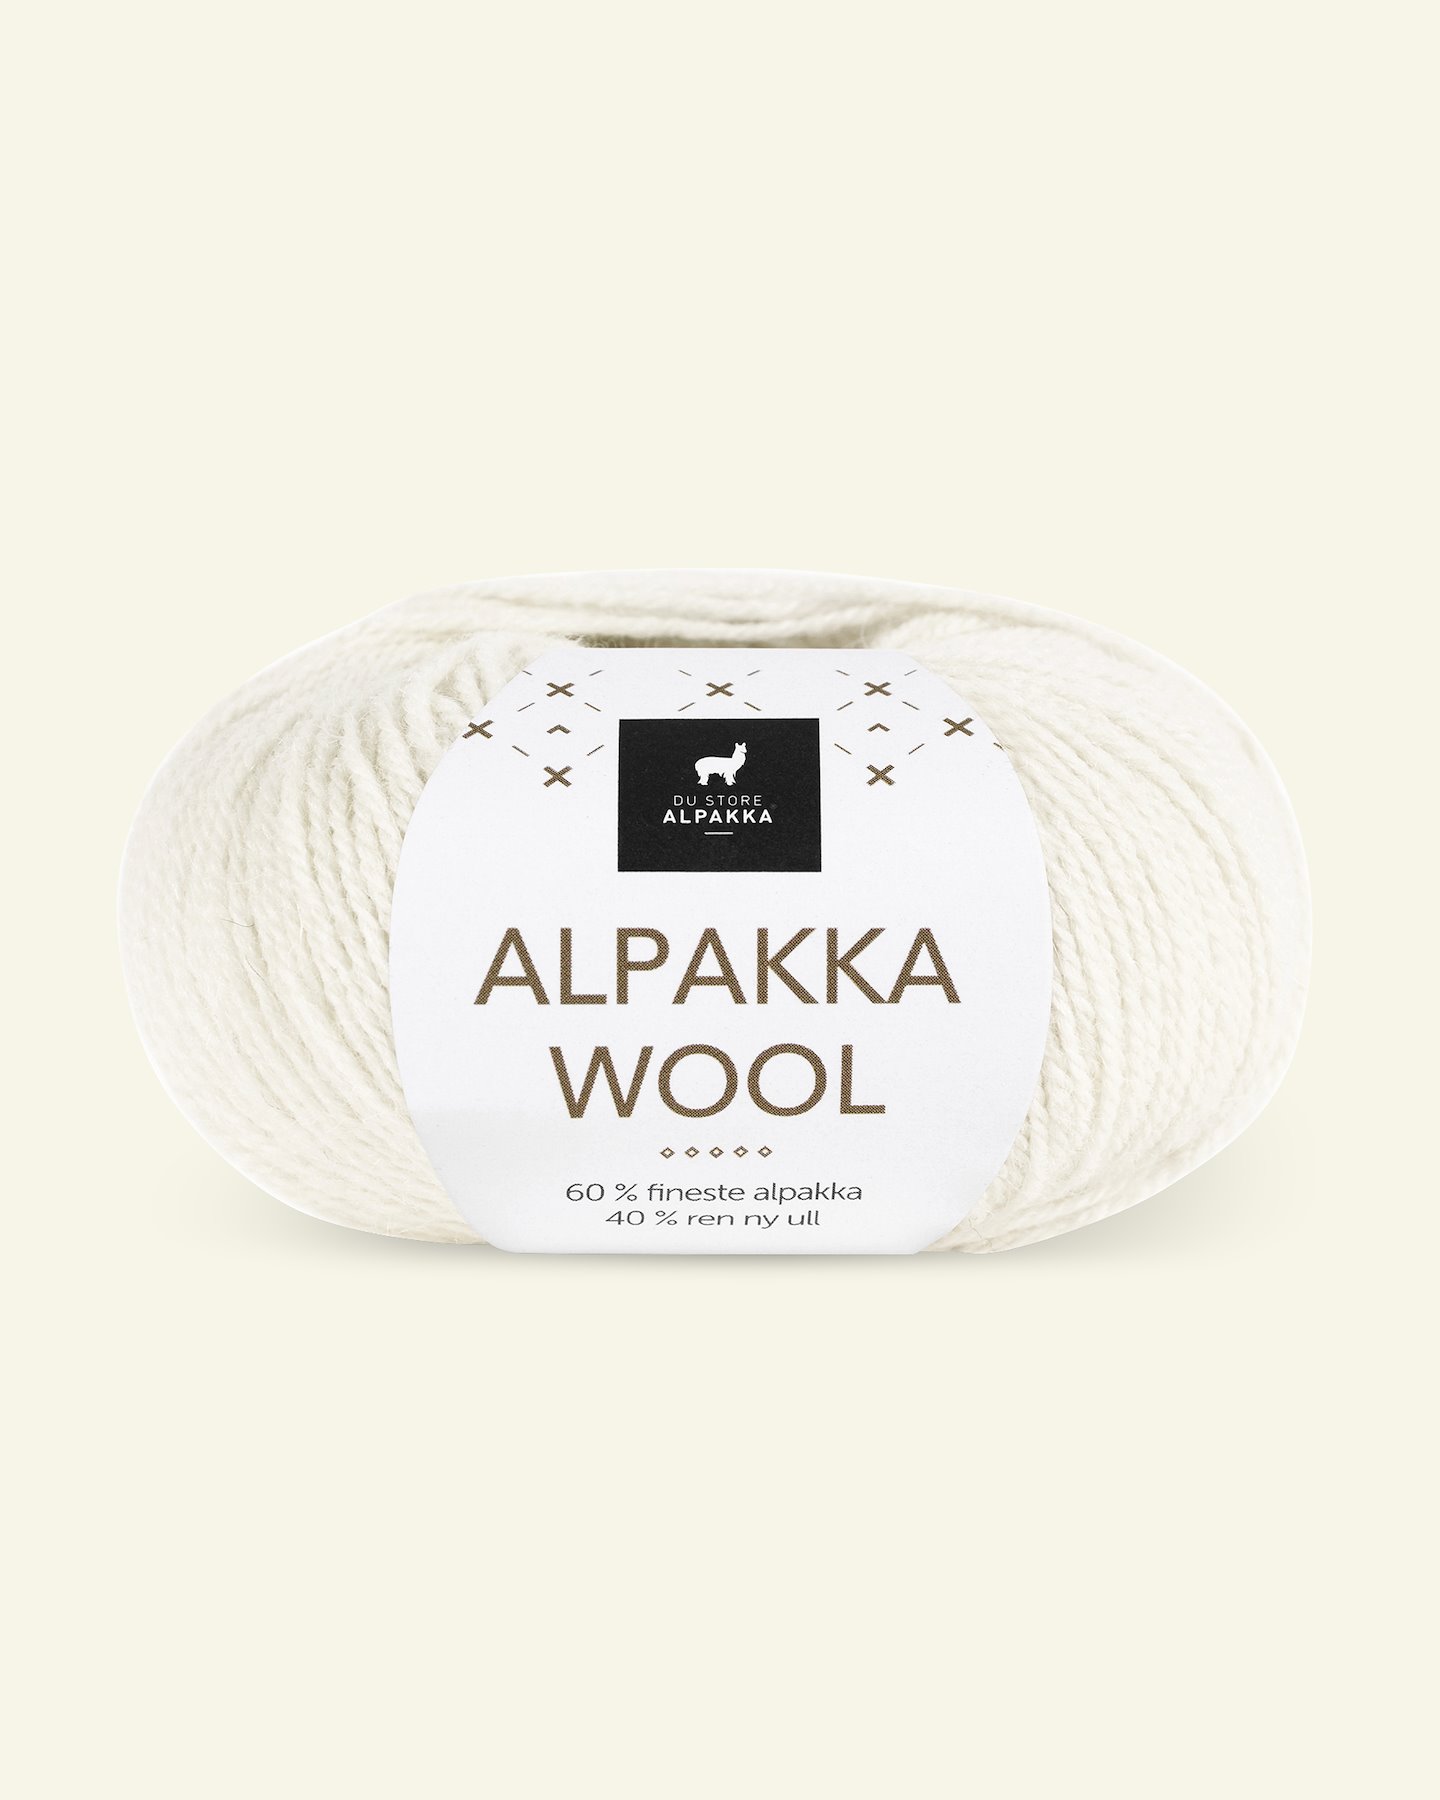 Du Store Alpakka, alpaca wool yarn, "Alpakka Wool", white (533) 90000562_pack